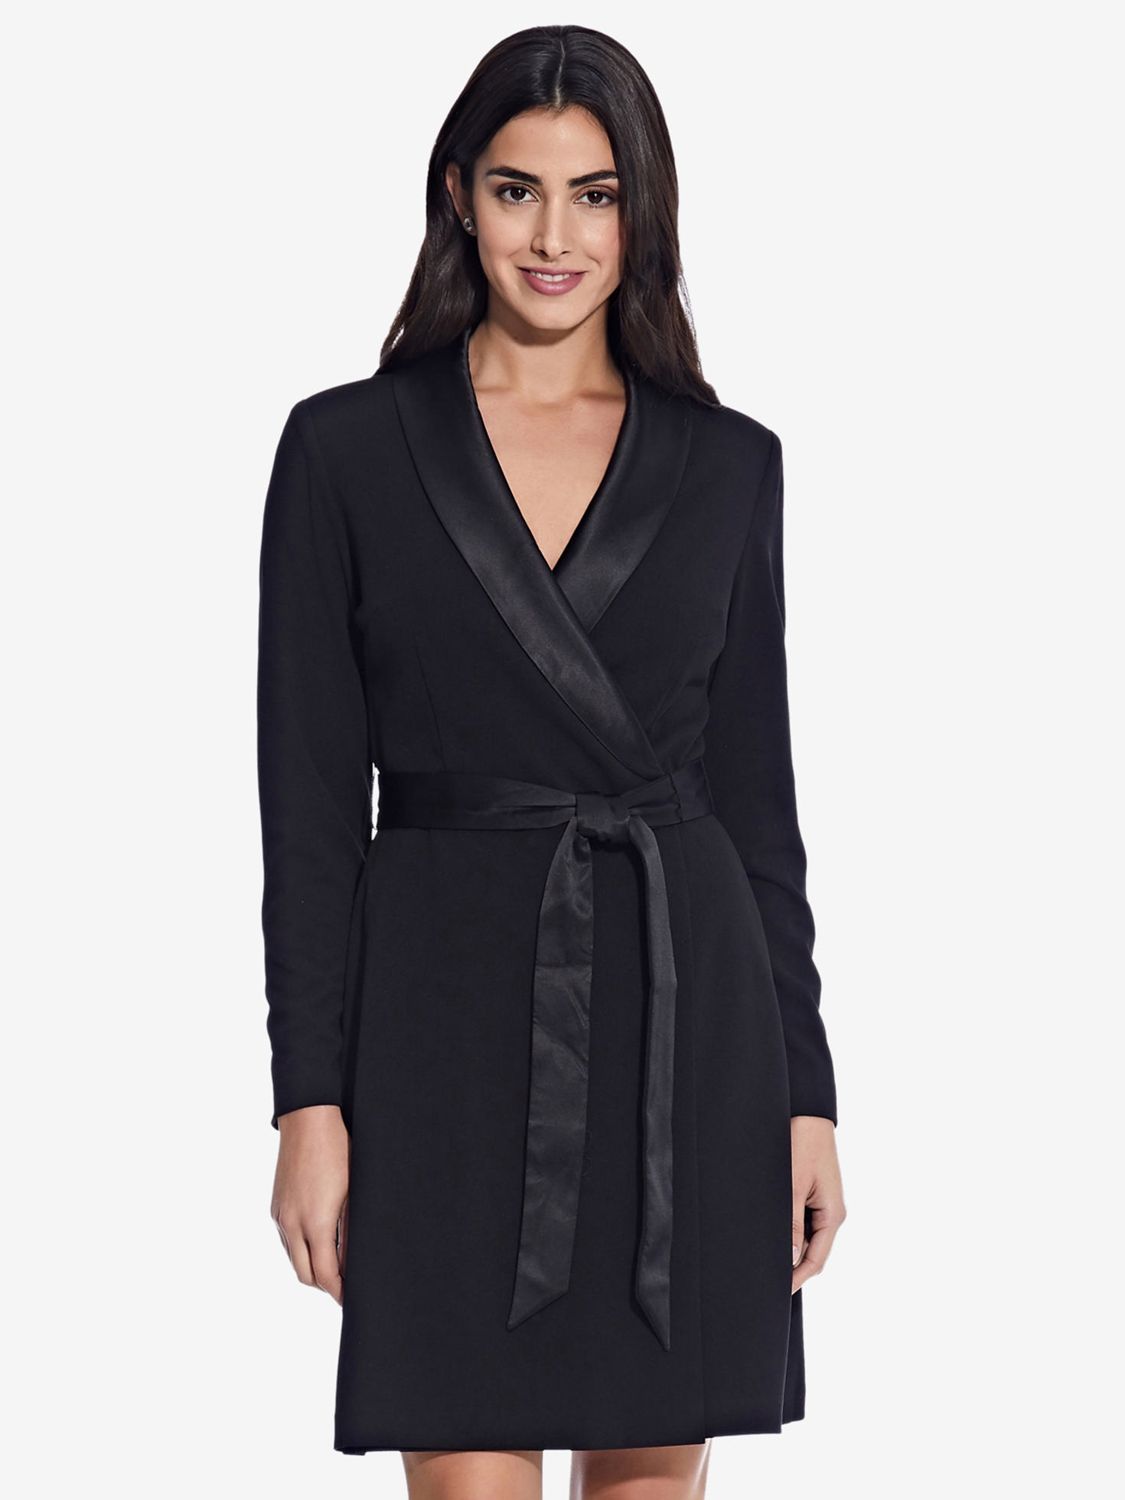 Adrianna Papell Crepe Tuxedo A-Line Dress, Black at John Lewis & Partners